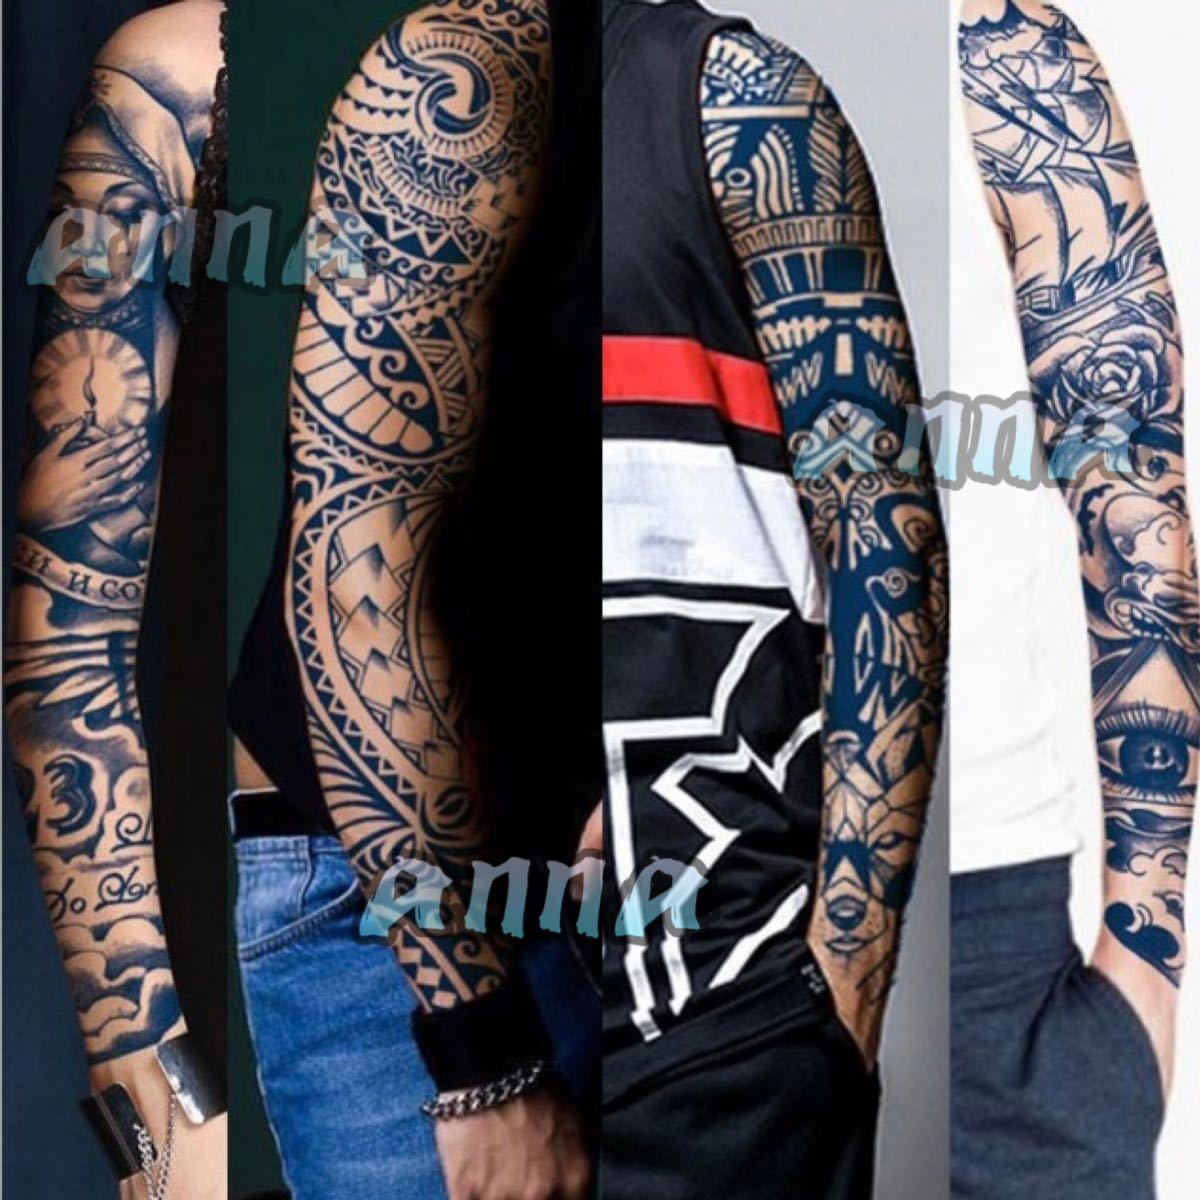 2 week . disappears 39 arm pair large scale henna ta toe Jug a tattoo seal tattoo seal tinto tattoo seal body art seal 